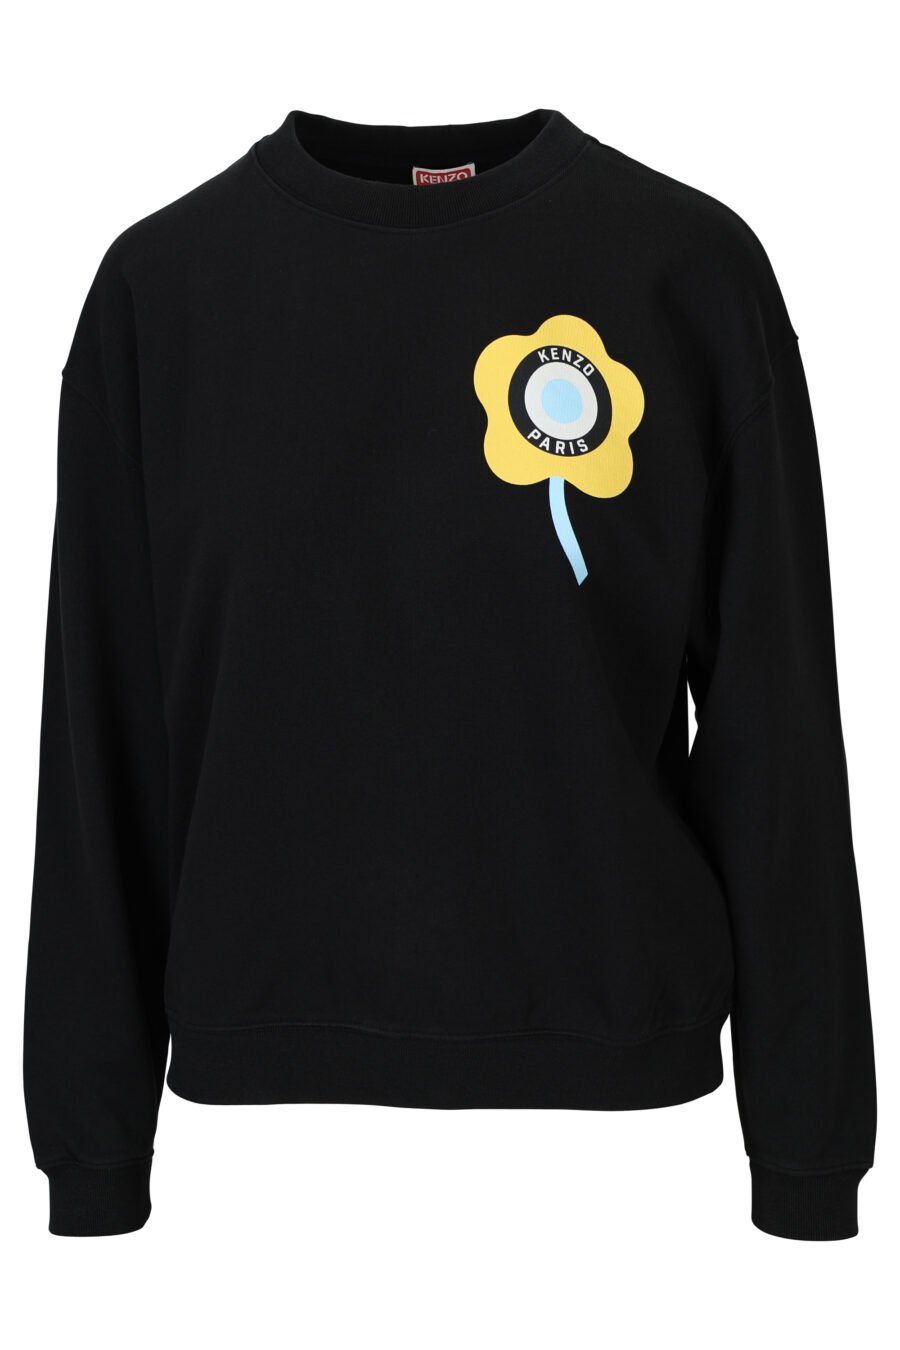 Schwarzes Sweatshirt mit gelbem "kenzo target" Logo - 3612230510432